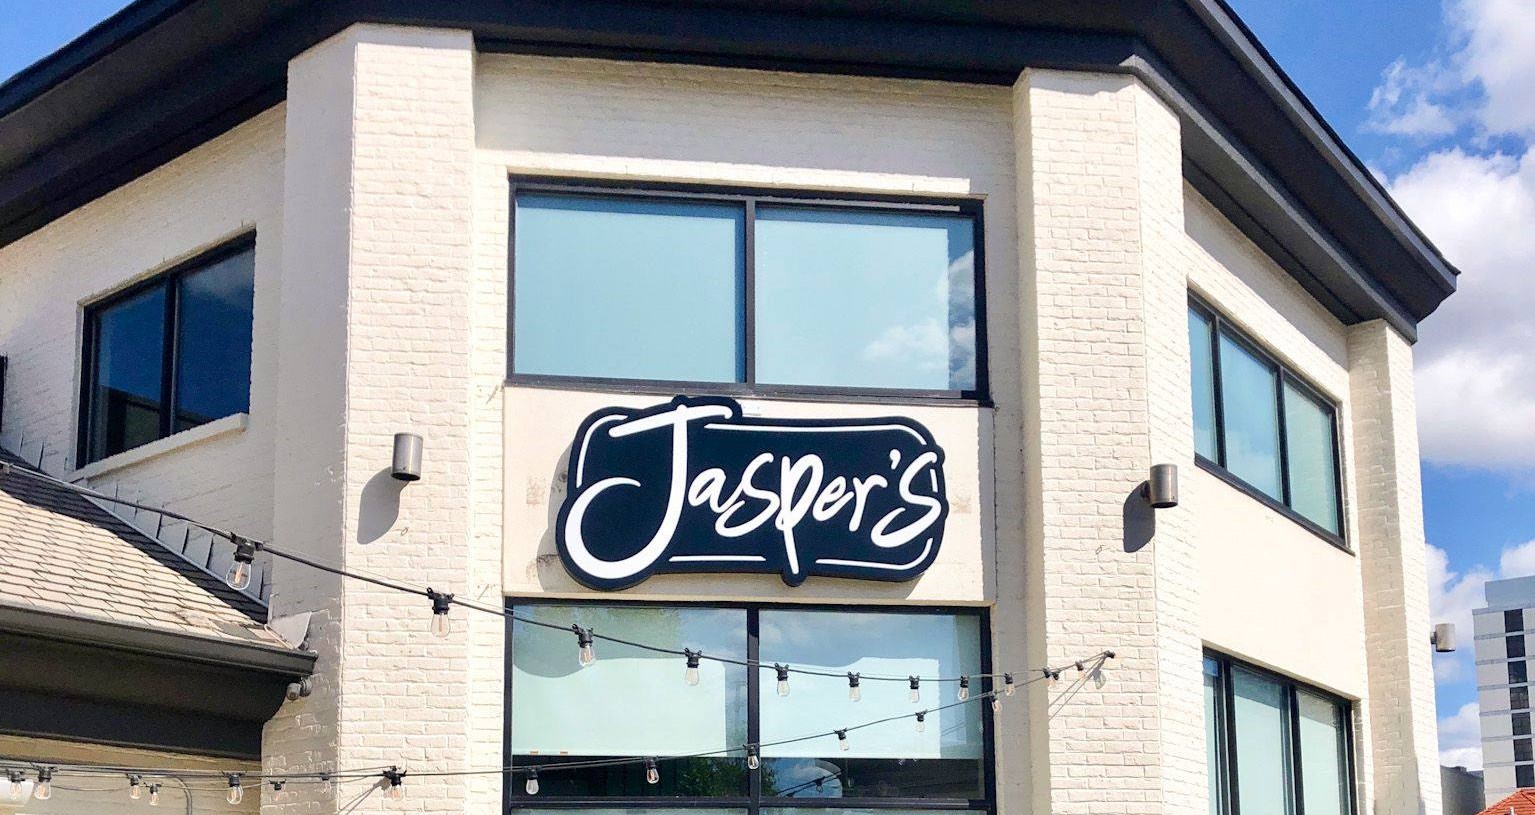 Jasper's Restaurant: A New Restaurant In Nashville's West End